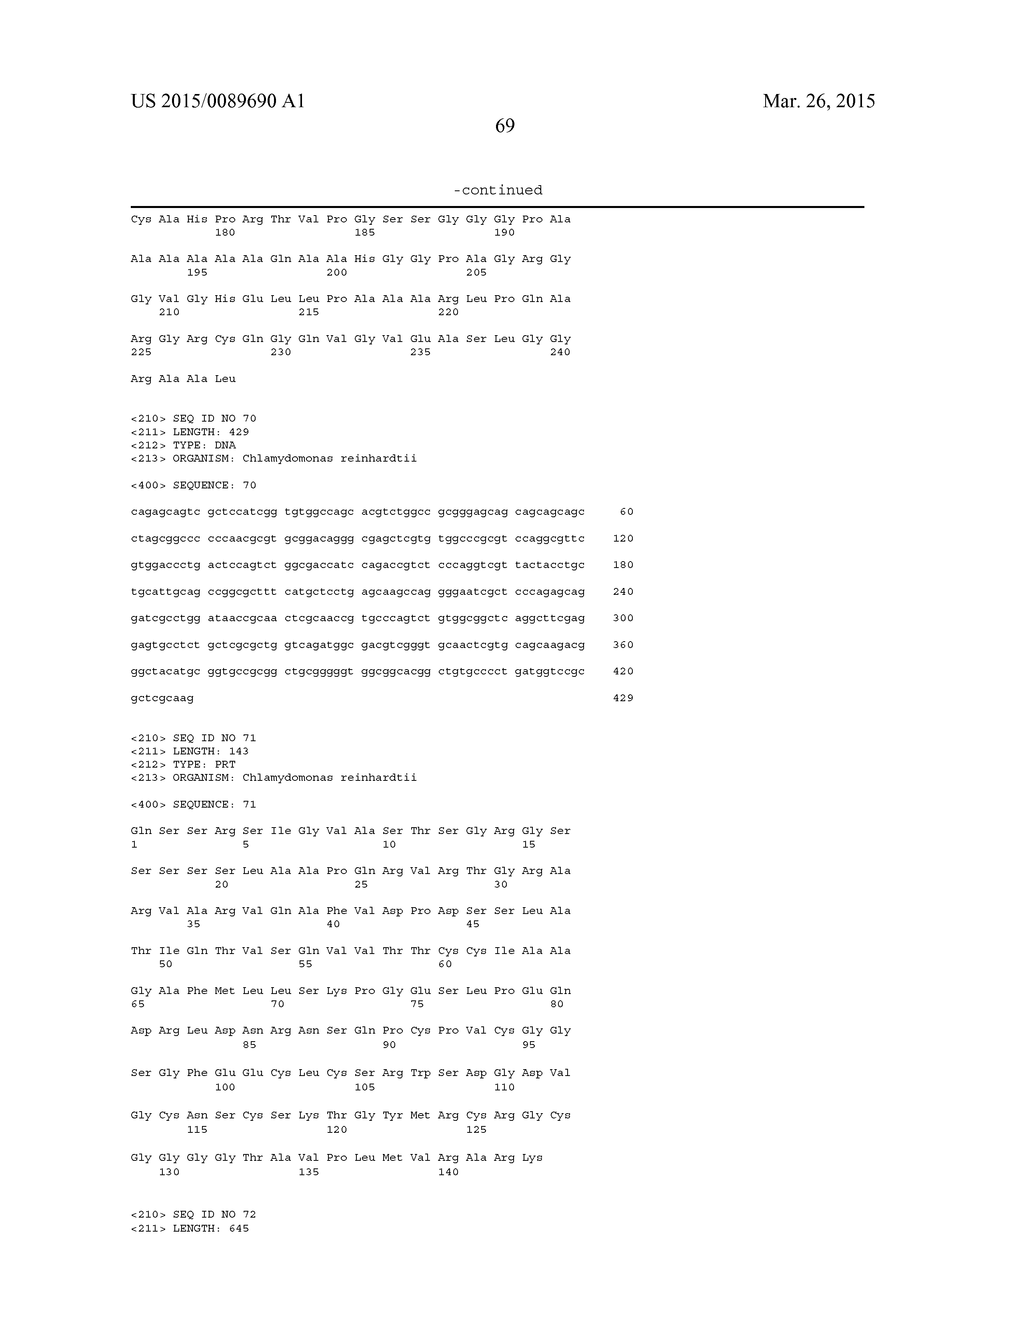 SODIUM HYPOCHLORITE RESISTANT GENES - diagram, schematic, and image 115